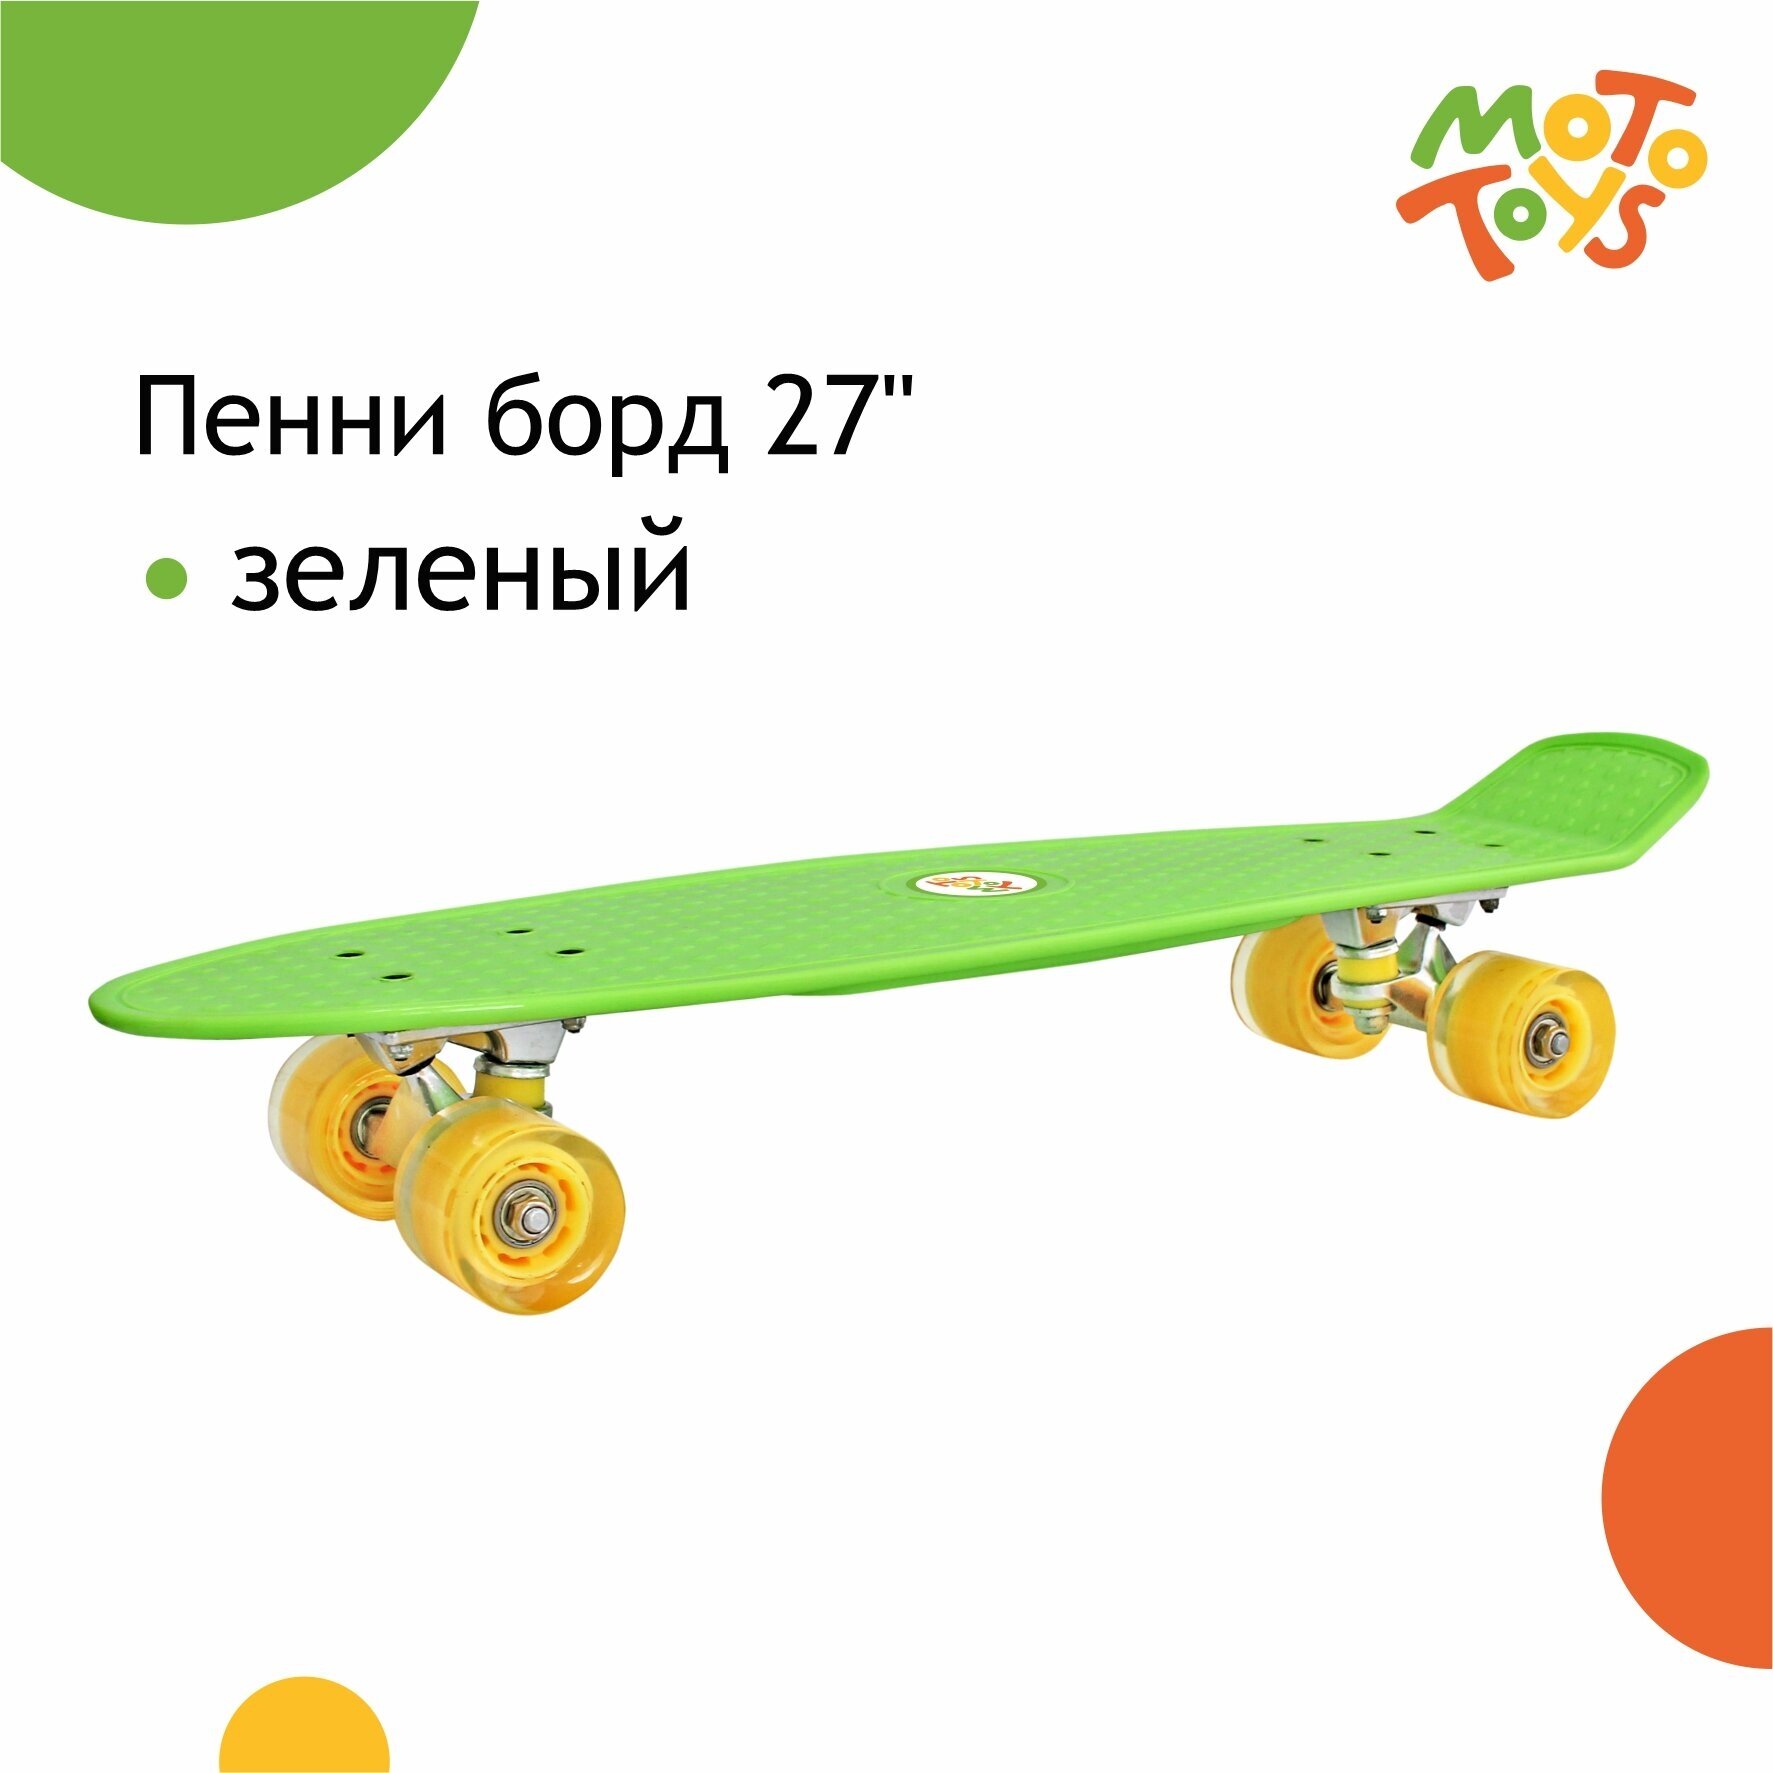 Пенни борд SB-203 дека 27" (колеса PU) зеленый MotoToys SB-203-KR7